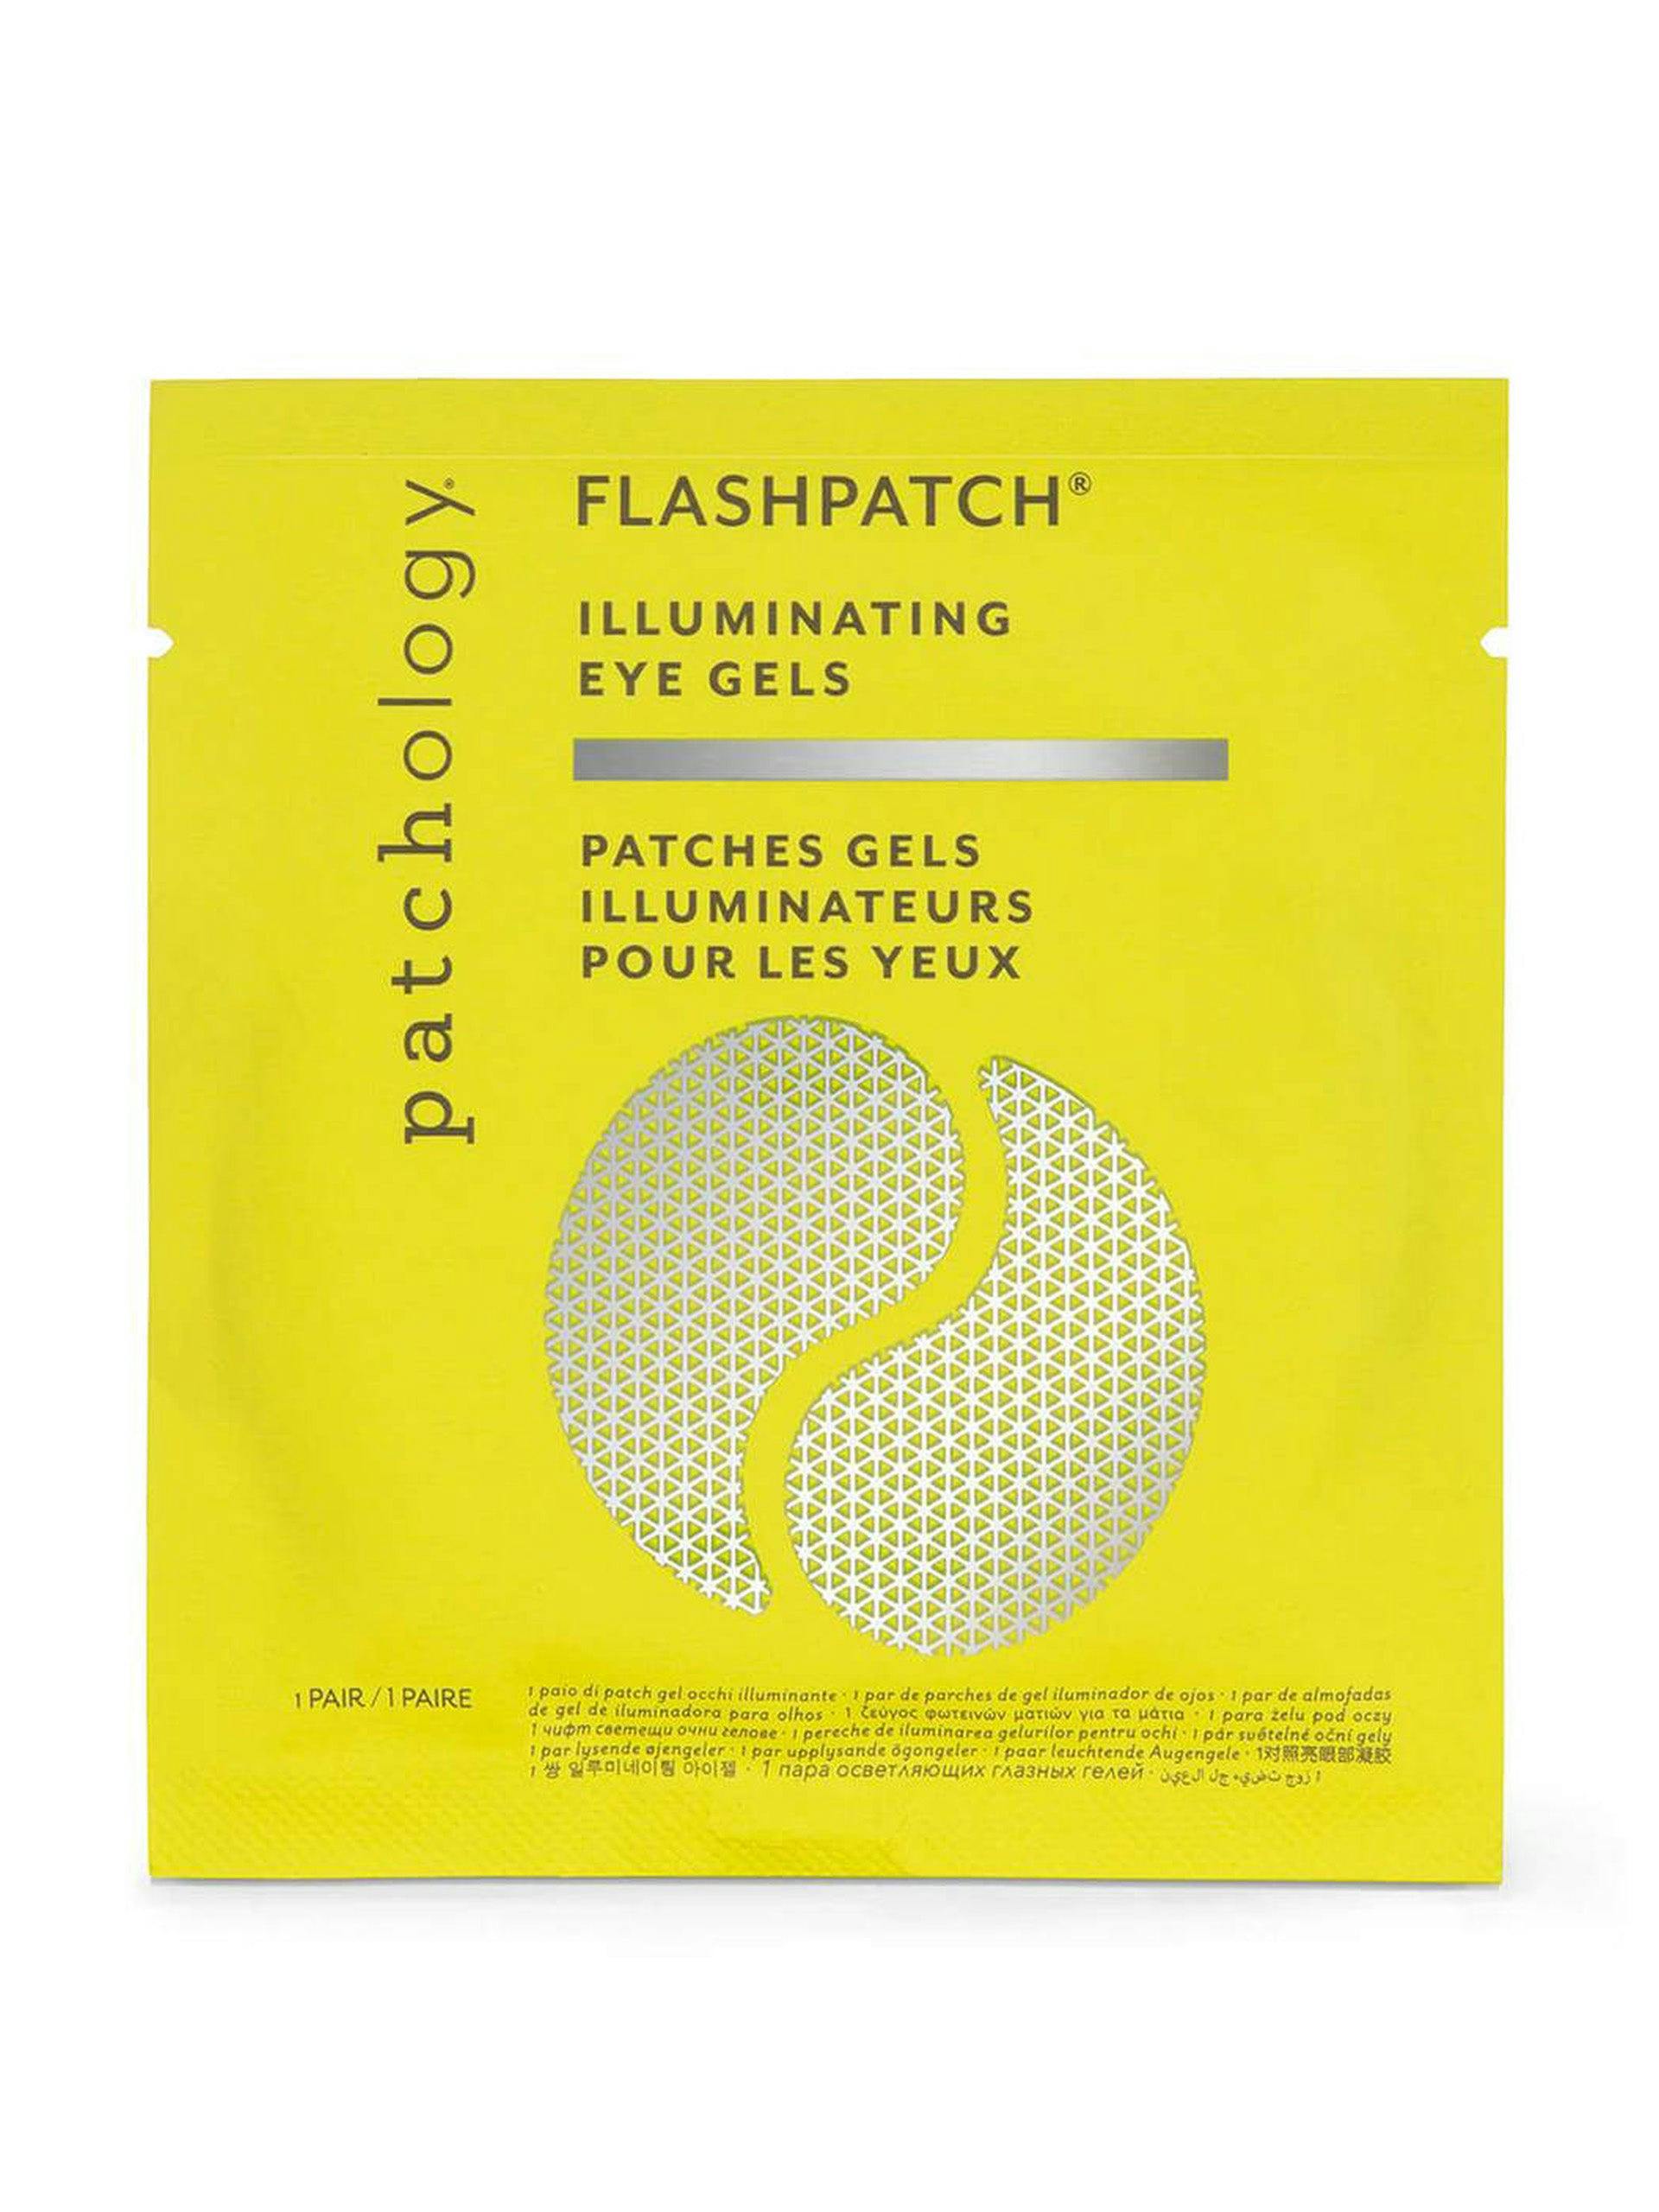 Flash patch illuminating eye gels